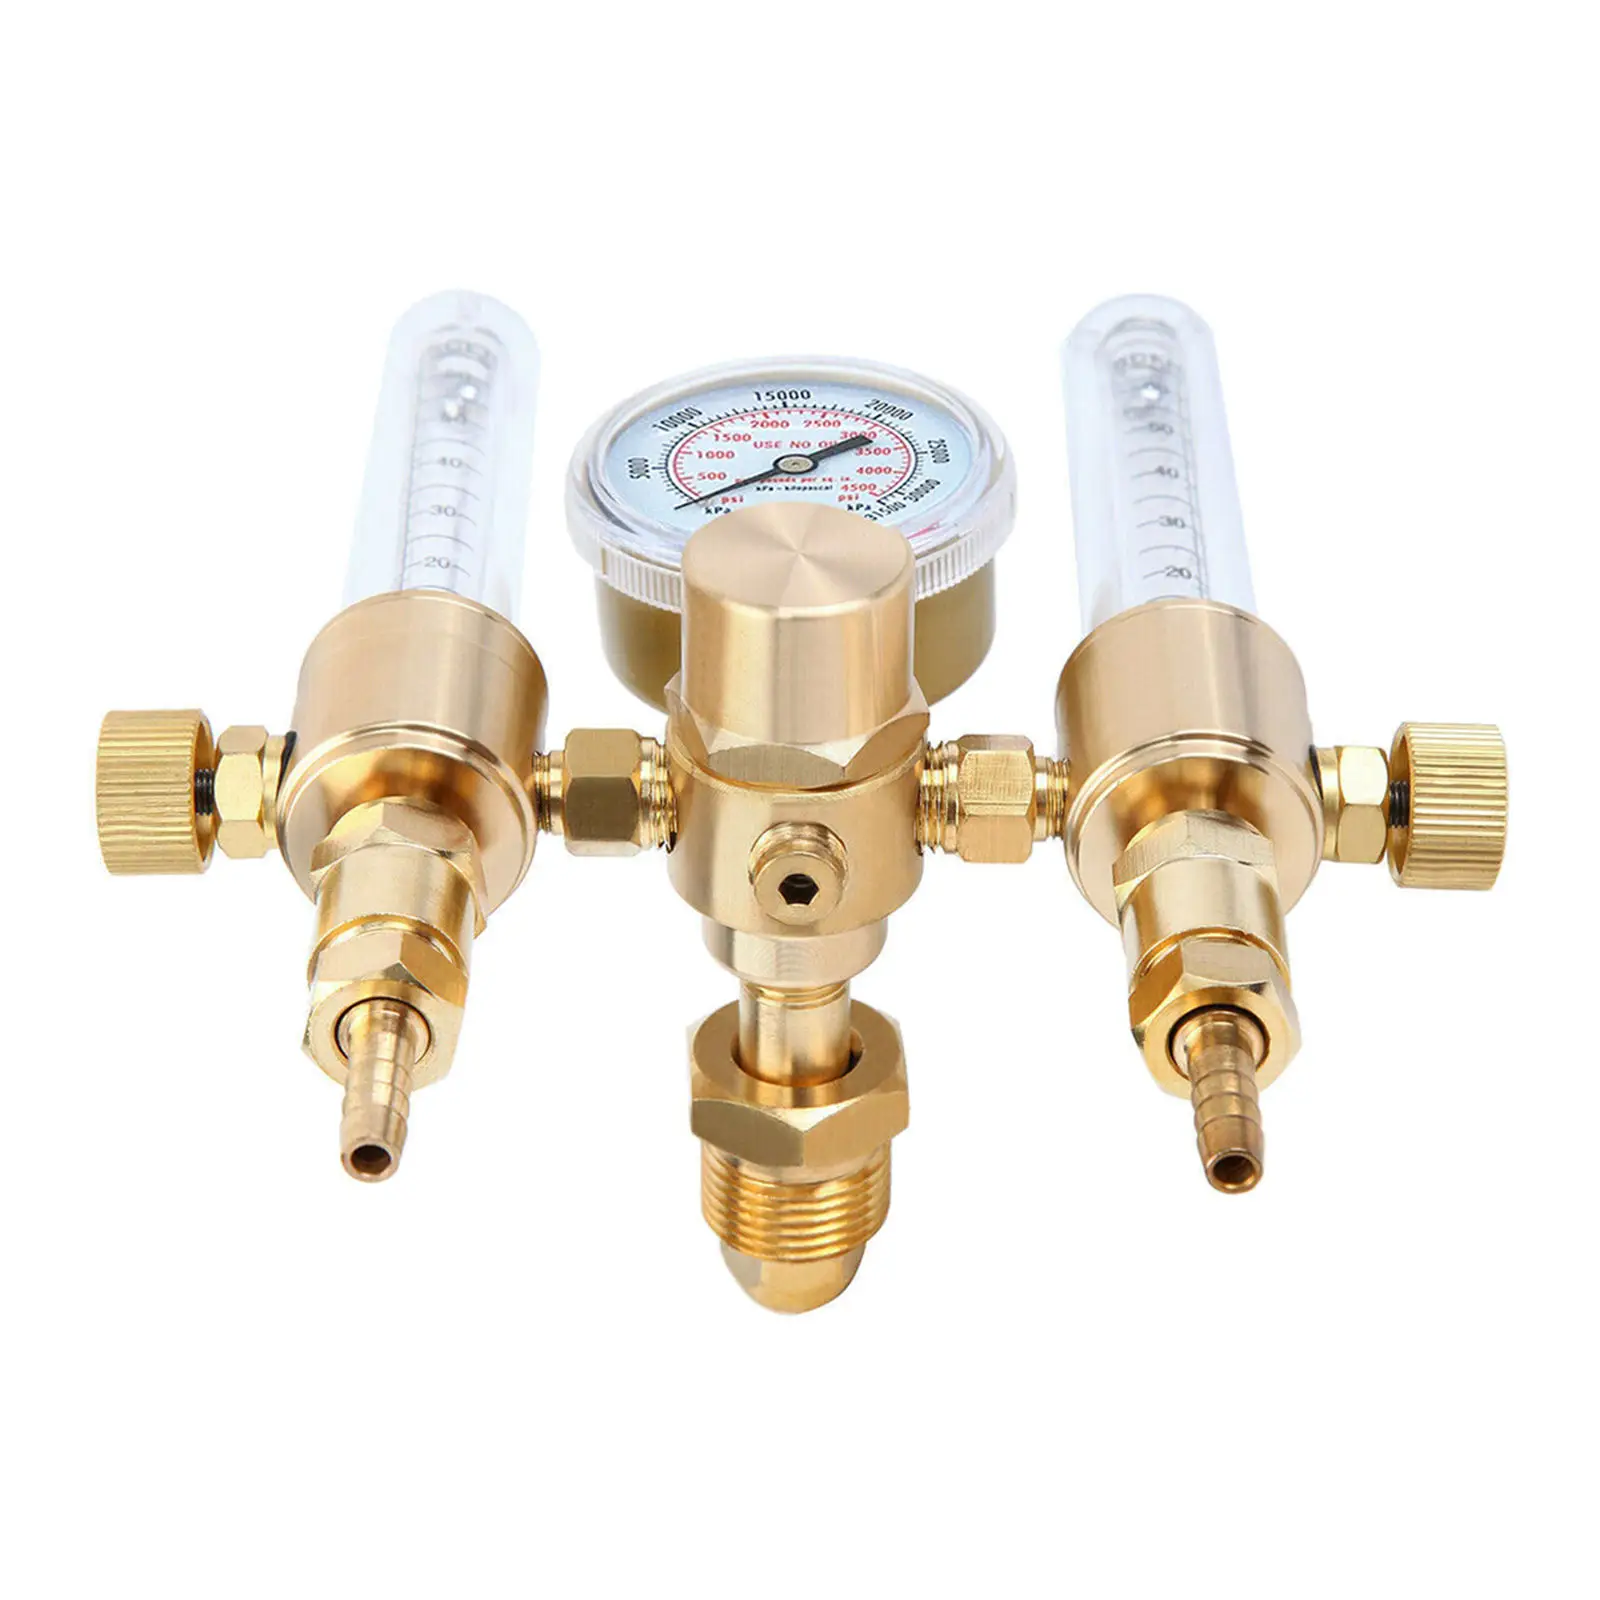  Dual Output Argon CO2 Gas Regulator Flowmeter 0-60CFH CGA580